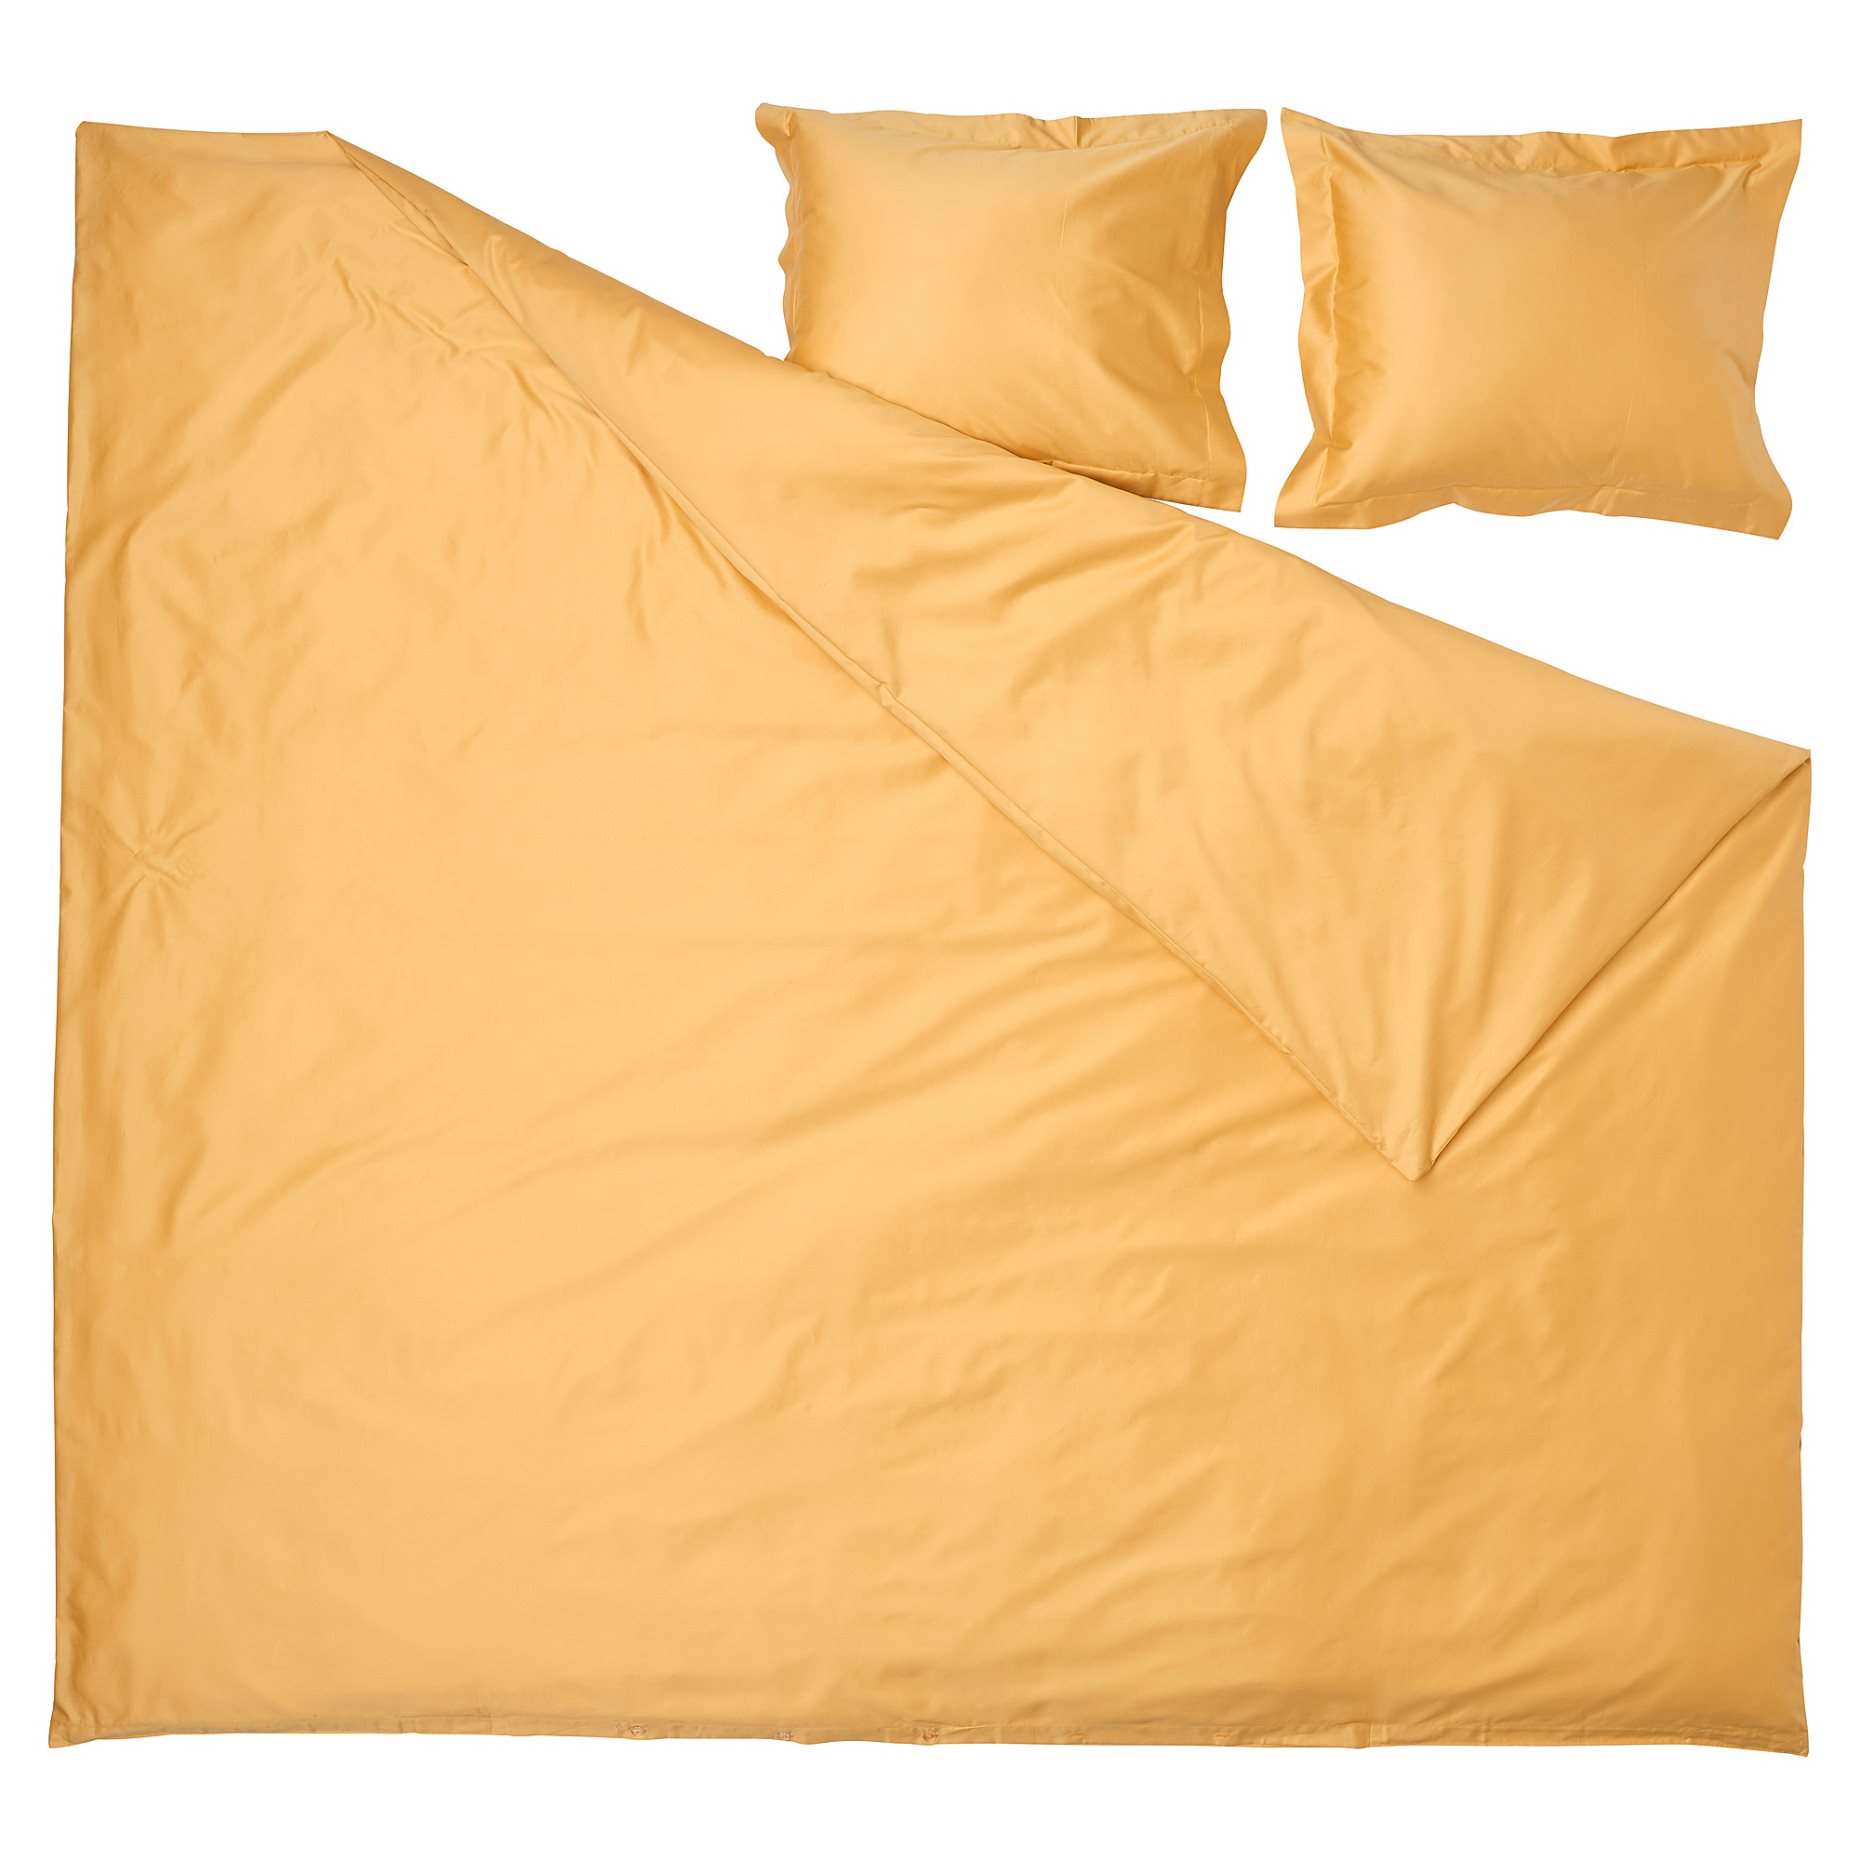 LUKTJASMIN, duvet cover and 2 pillowcases, 240x220/50x60 cm, 005.410.98